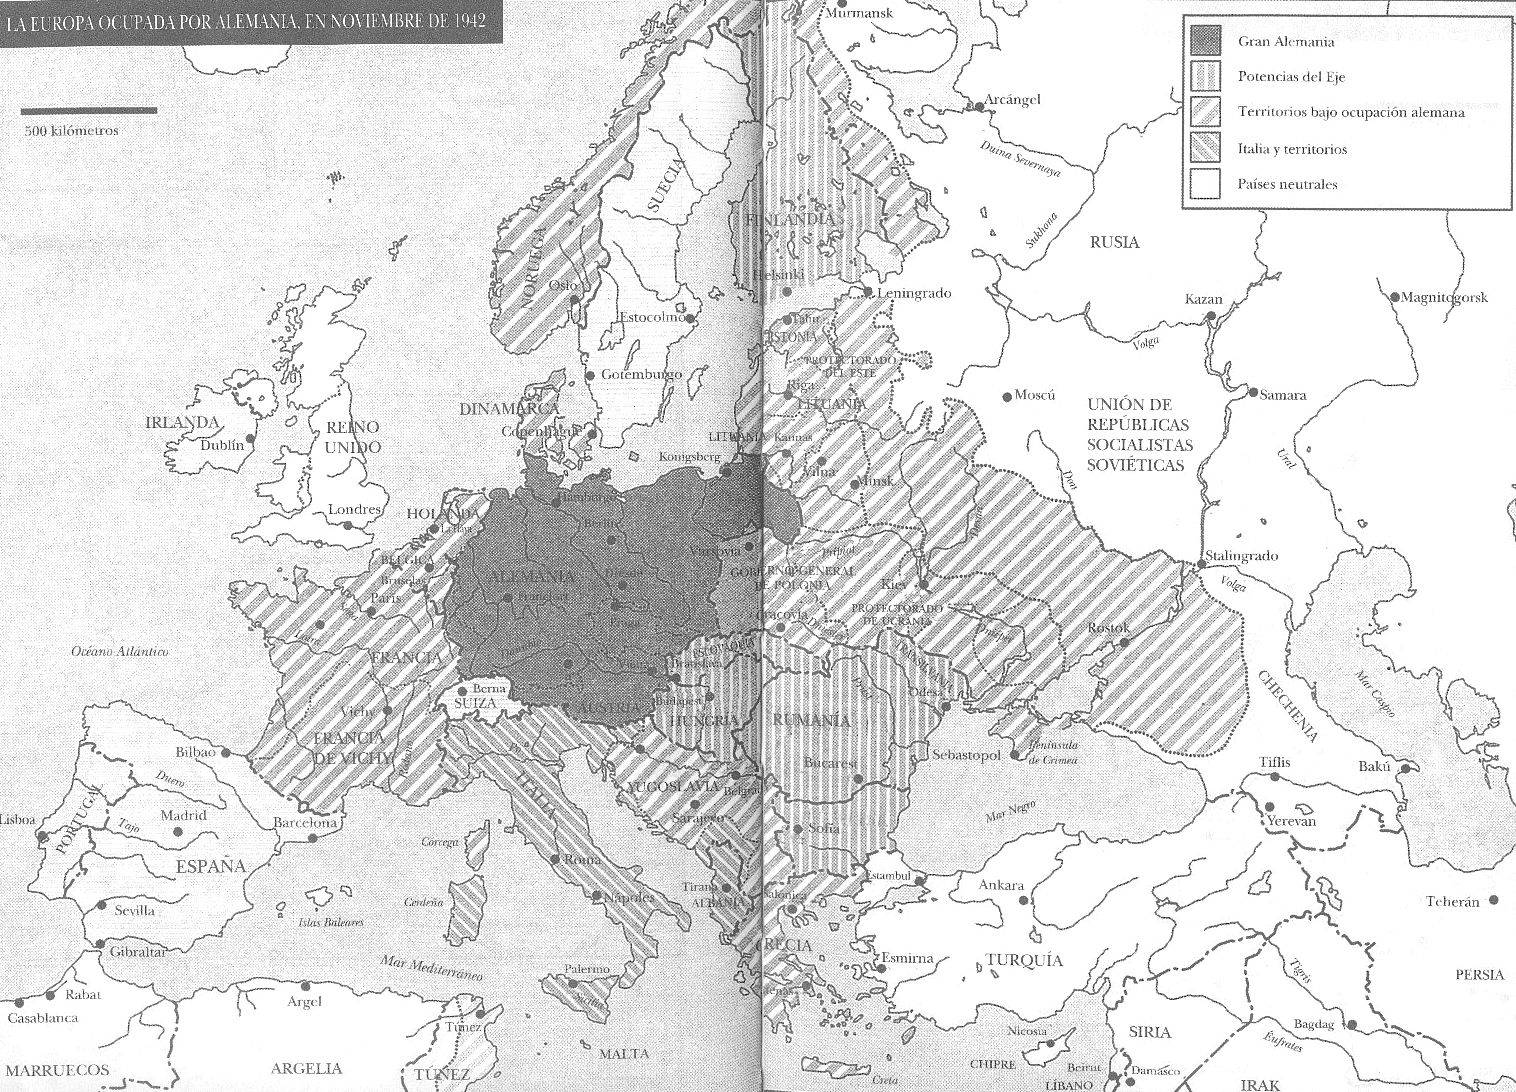 La invasin de los Nazis en Europa